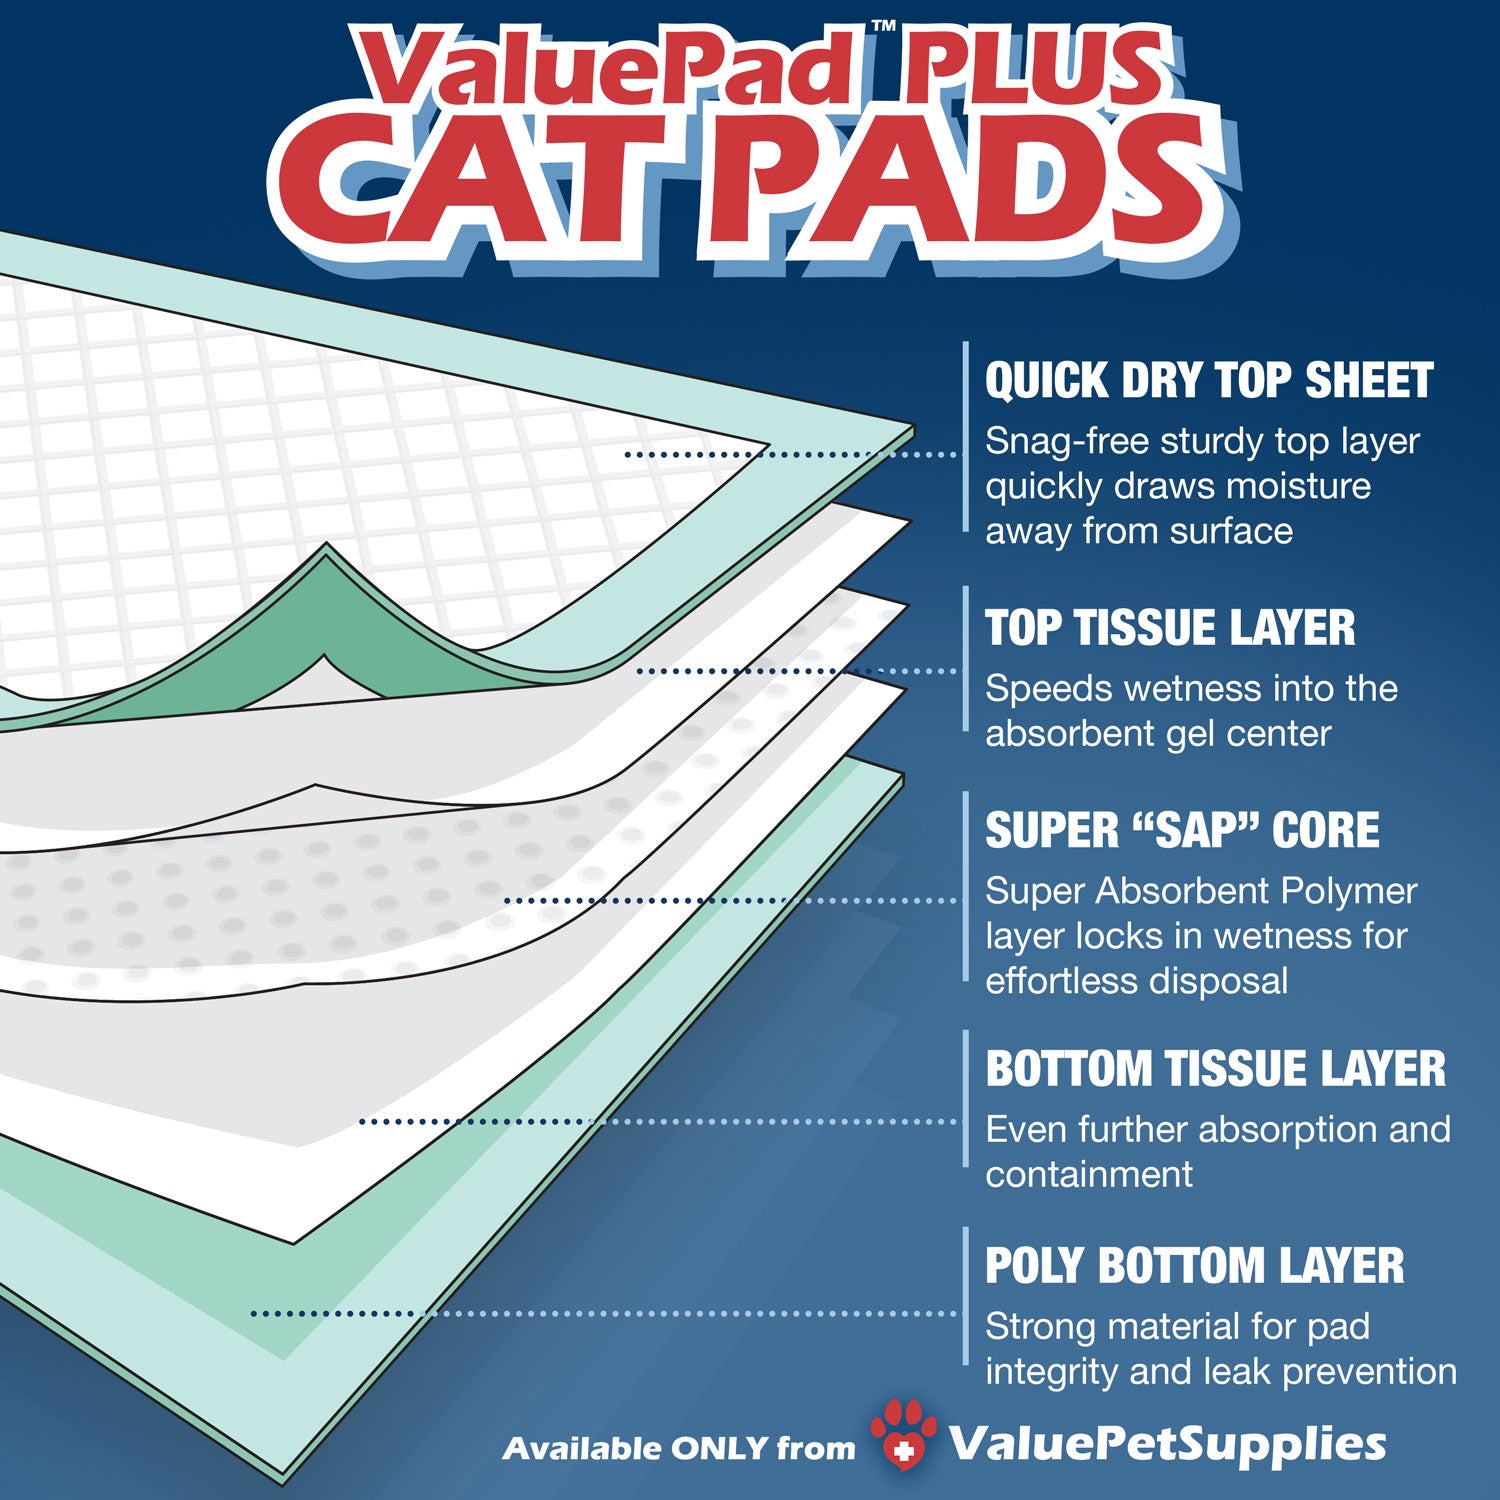 ValuePad Plus Cat Litter Pads, 16.9x11.4 Inch, Unscented, 25 Count - Breeze Compatible Refills